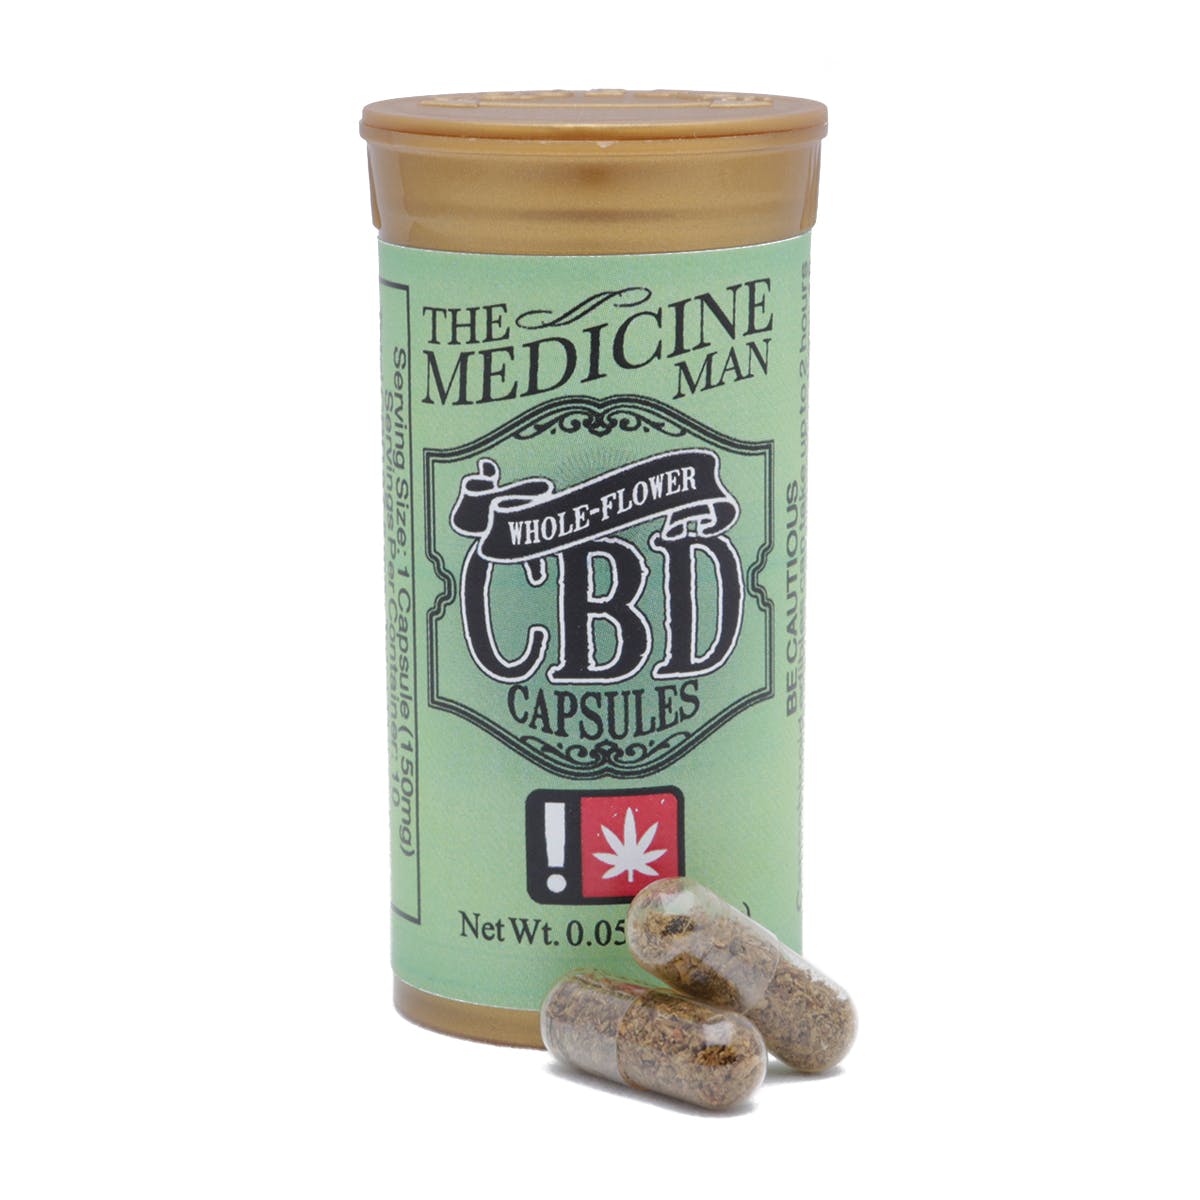 The Medicine Man - Whole Flower CBD Capsules